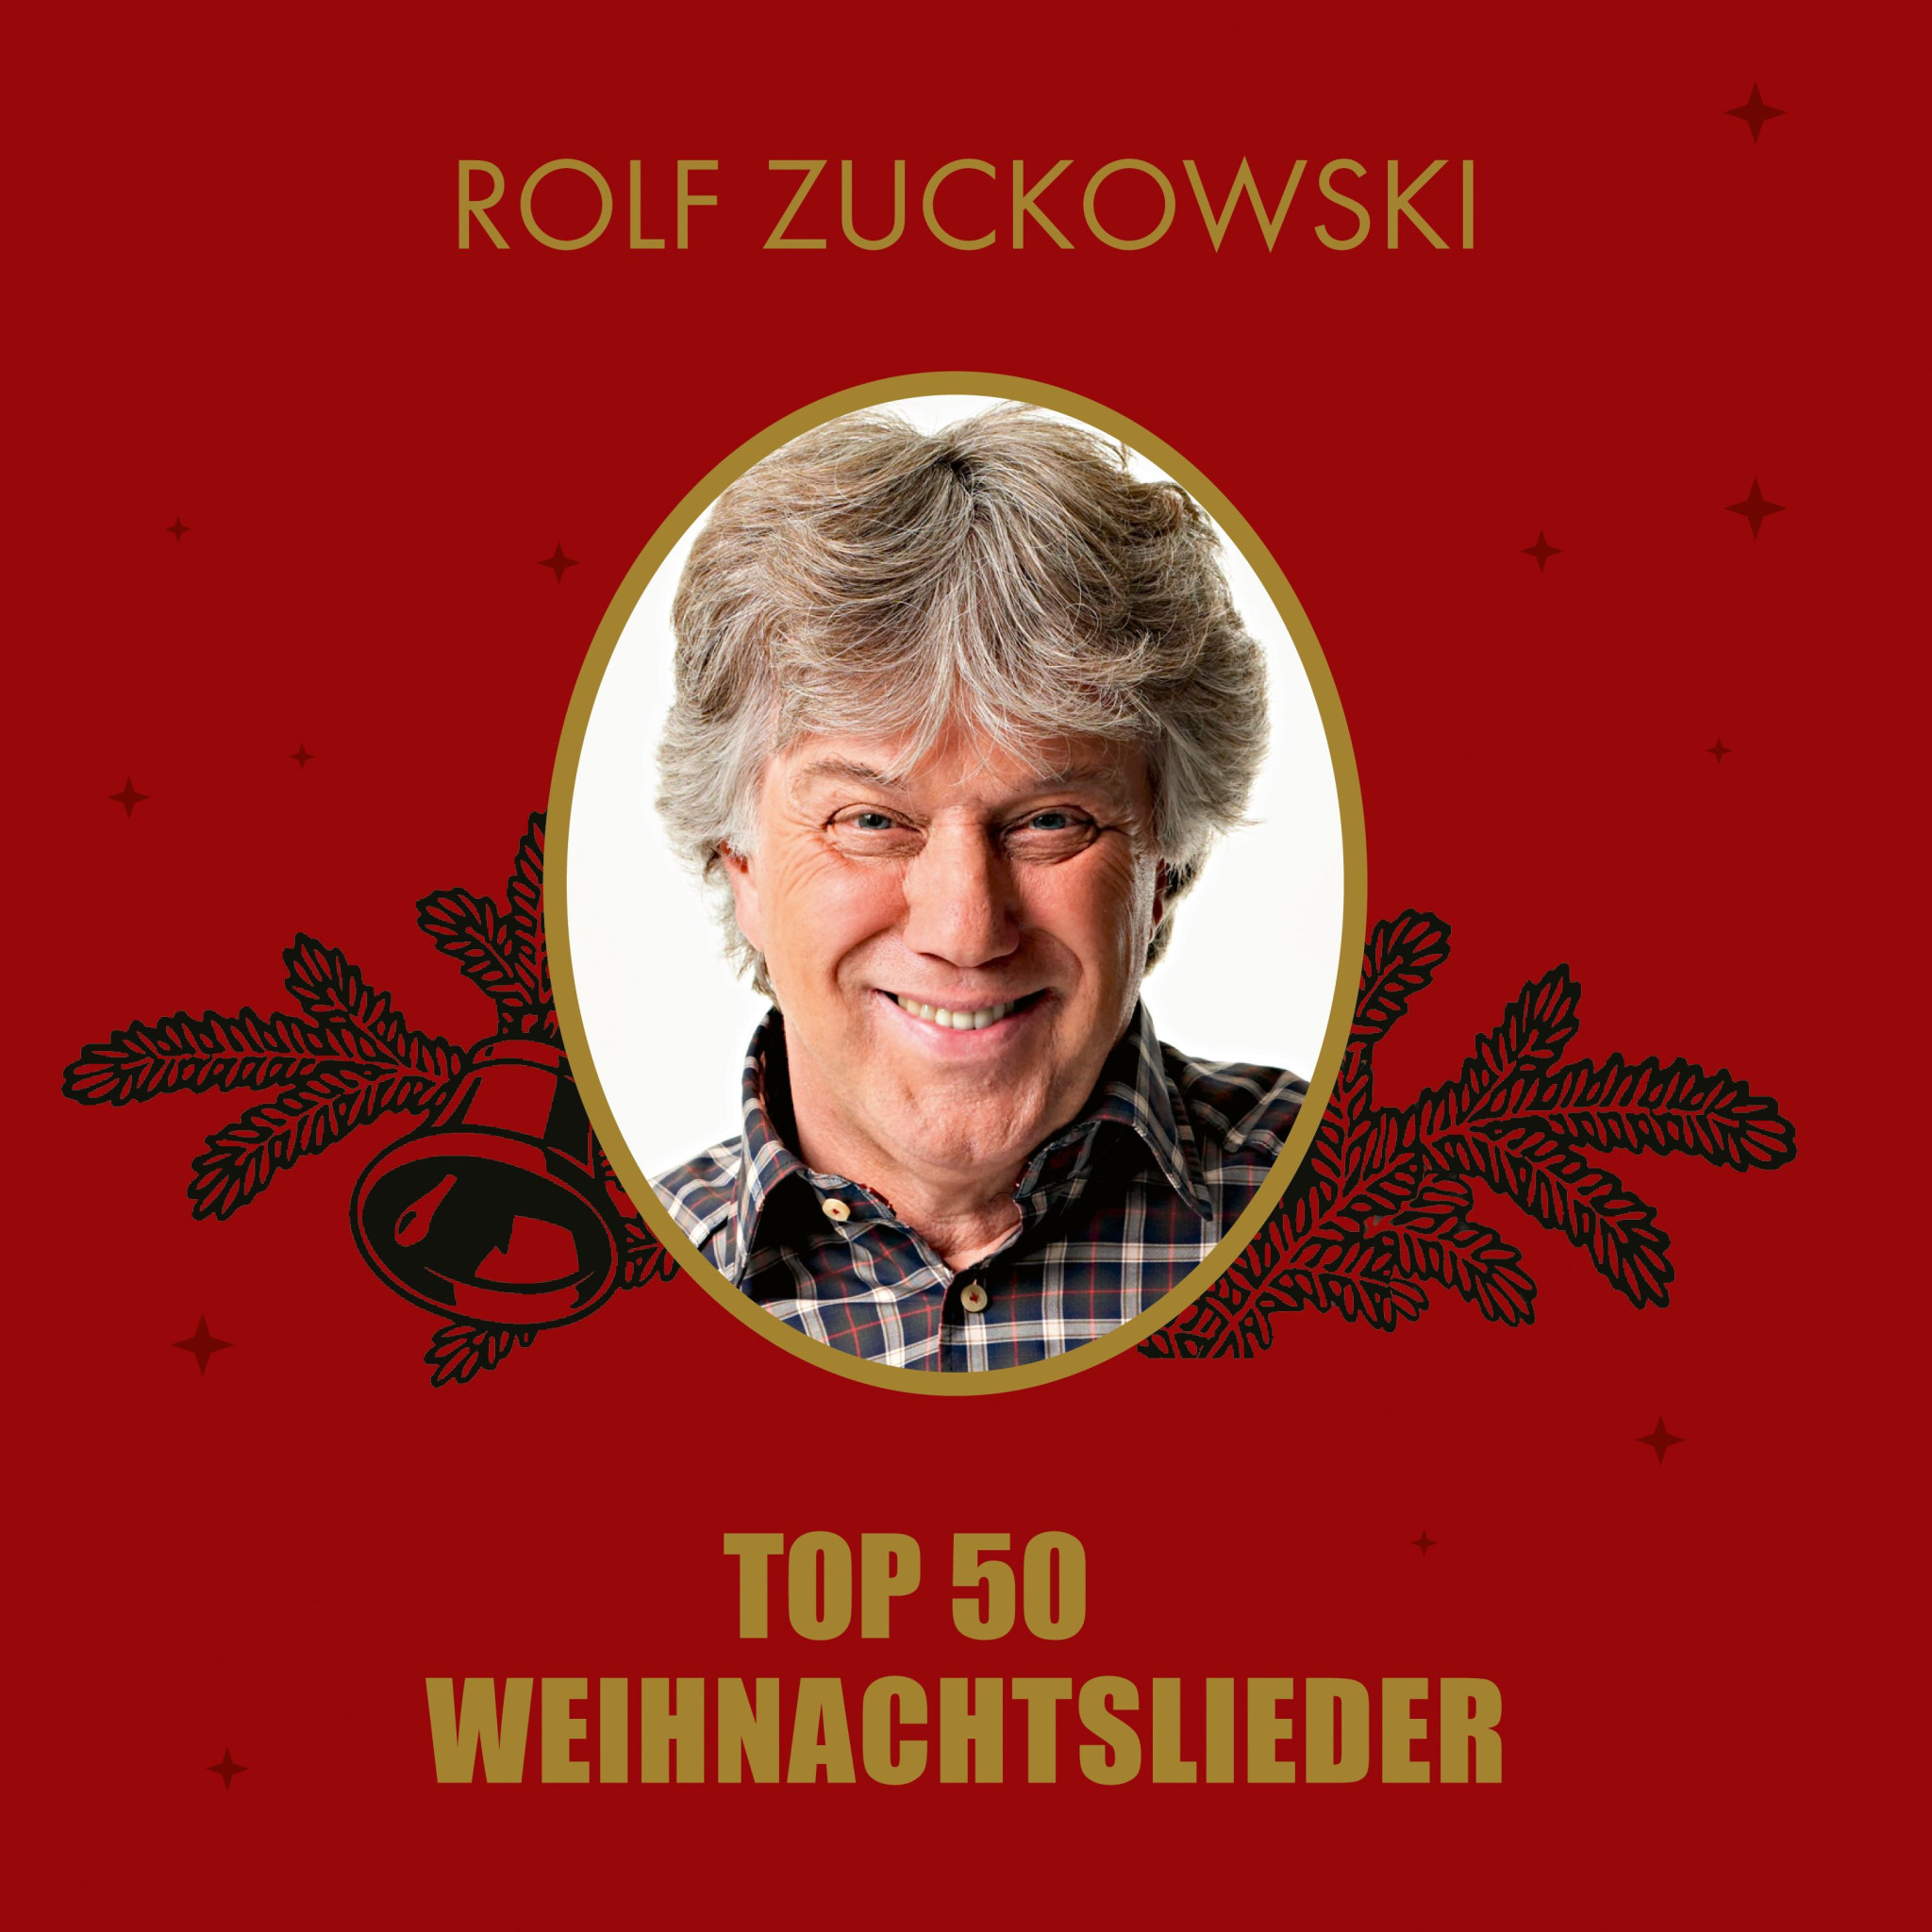 Top 50 Weihnachtslieder_Spotify_Playlistcover_Rolf Zuckowski.jpg